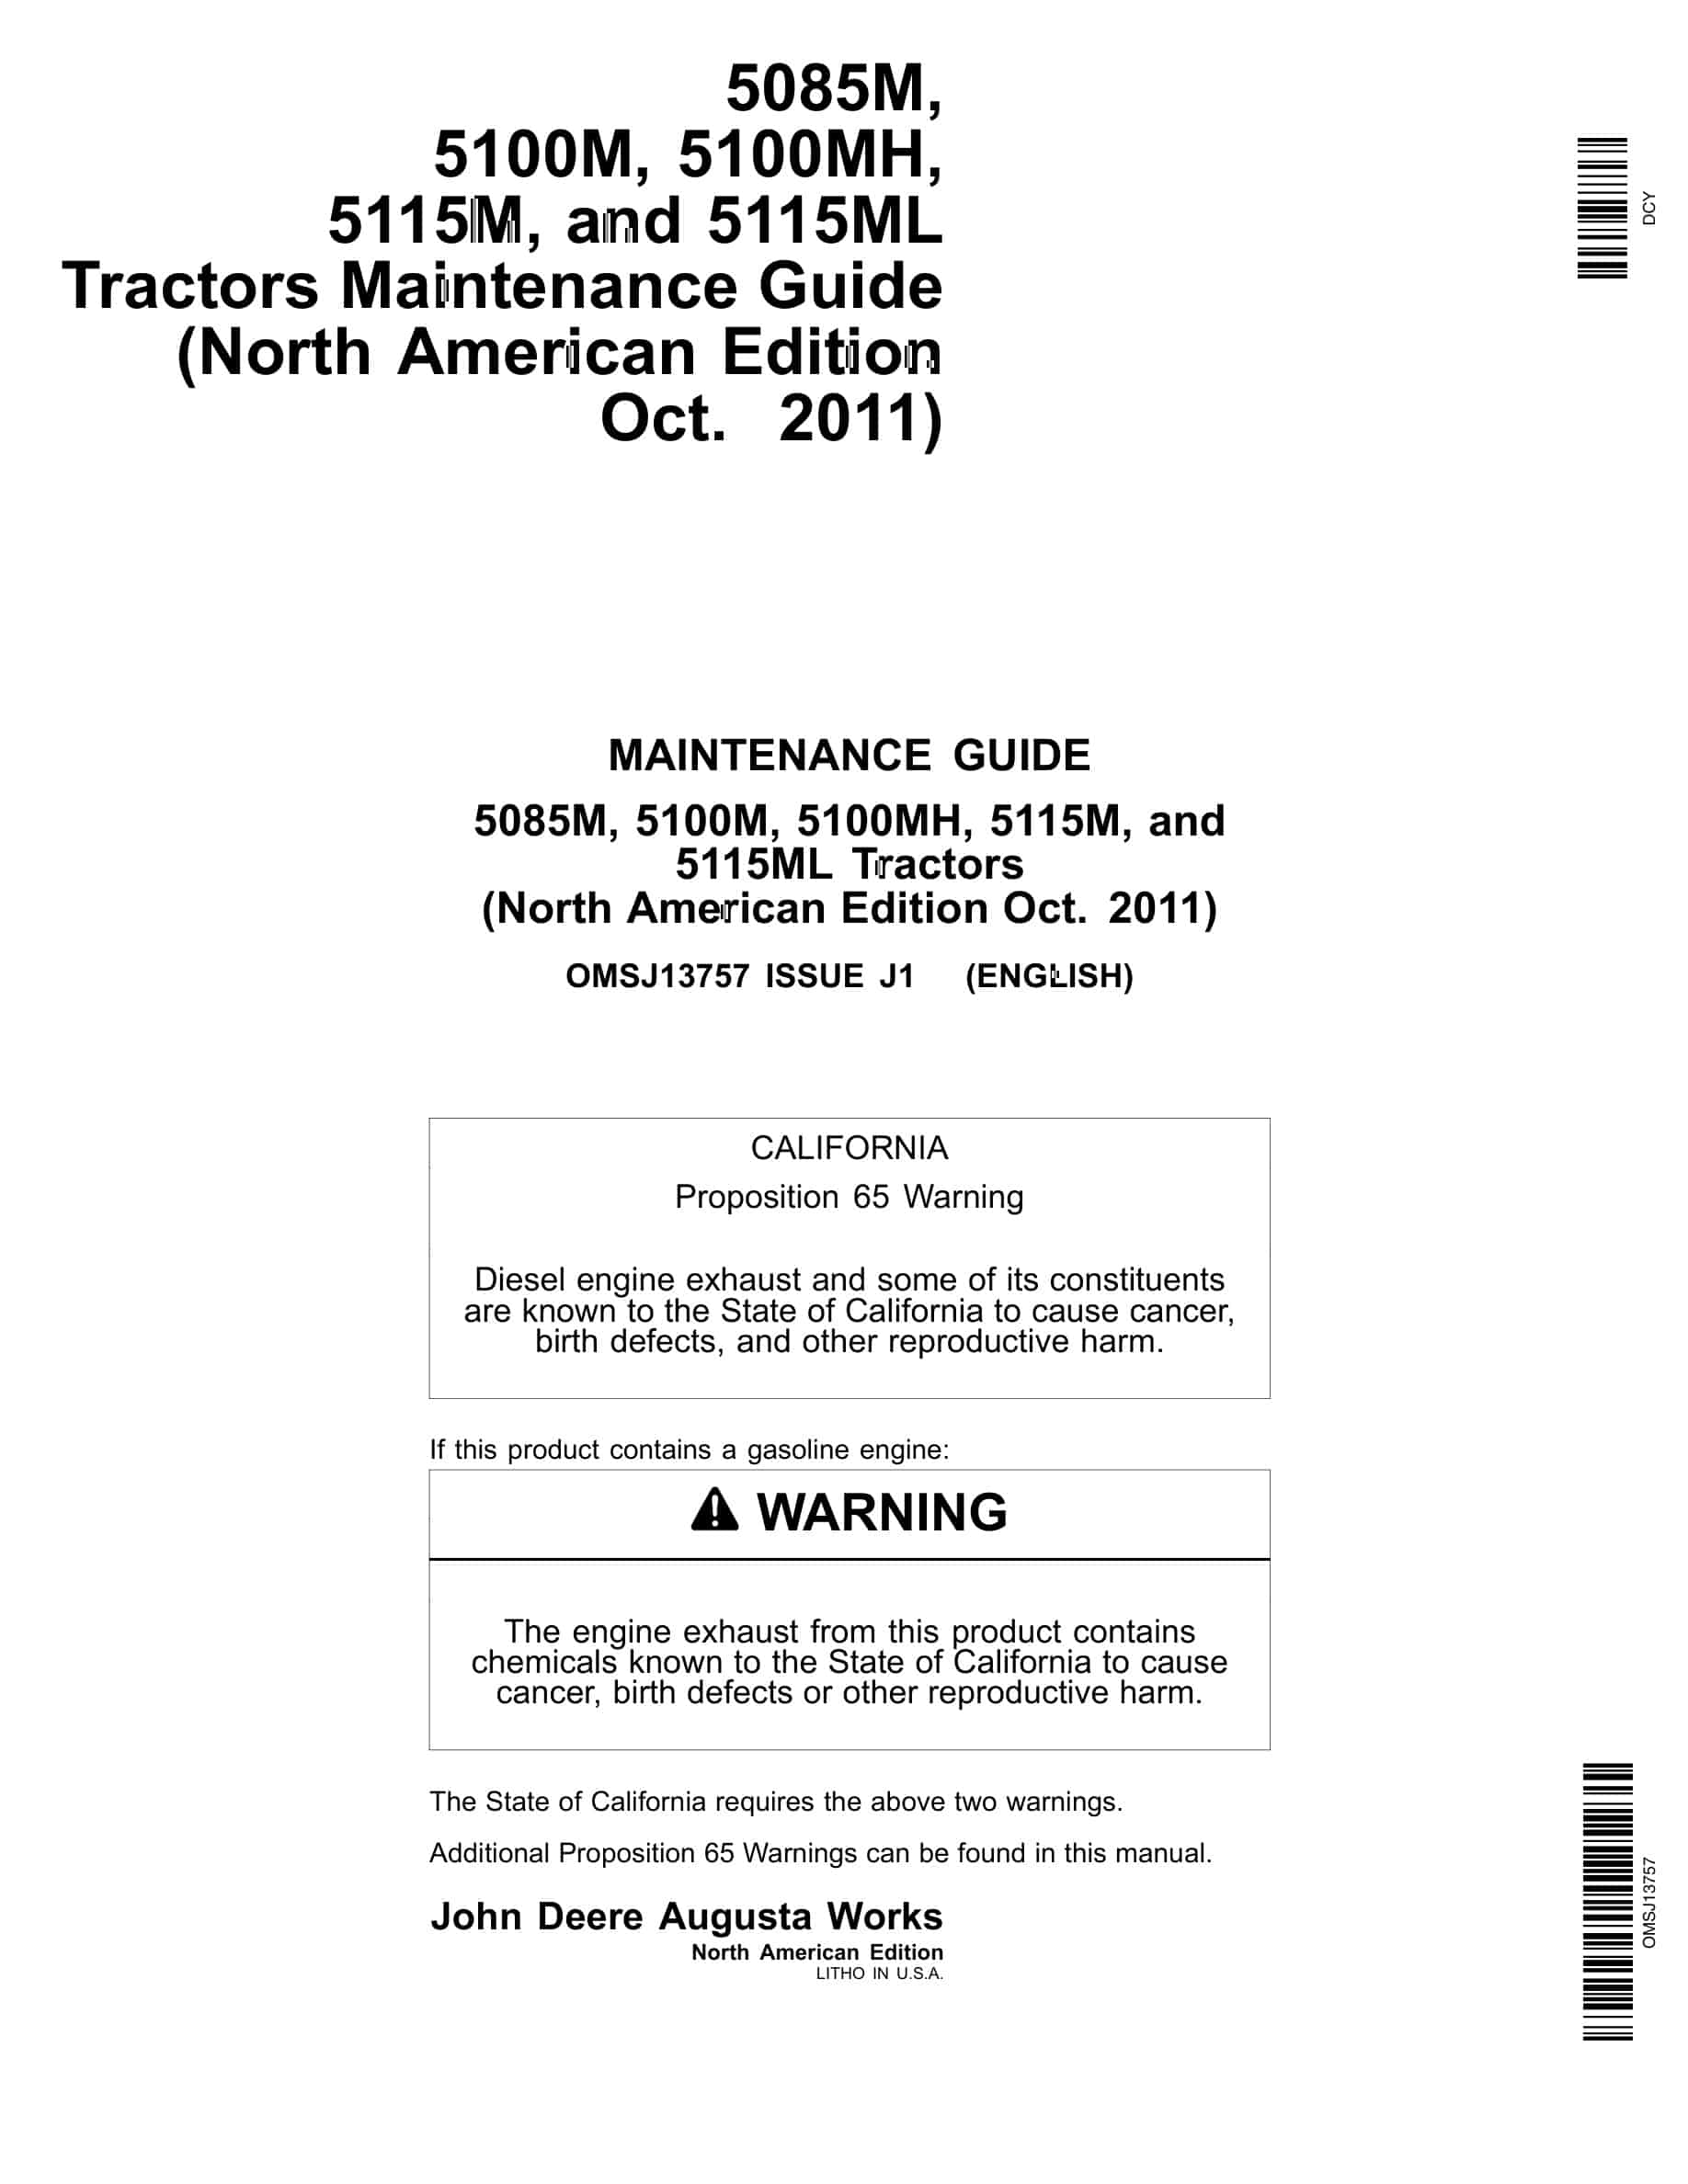 John Deere 5085M, 5100M, 5100MH, 5115M, and 5115ML Tractor Operator Manual OMSJ13757-1